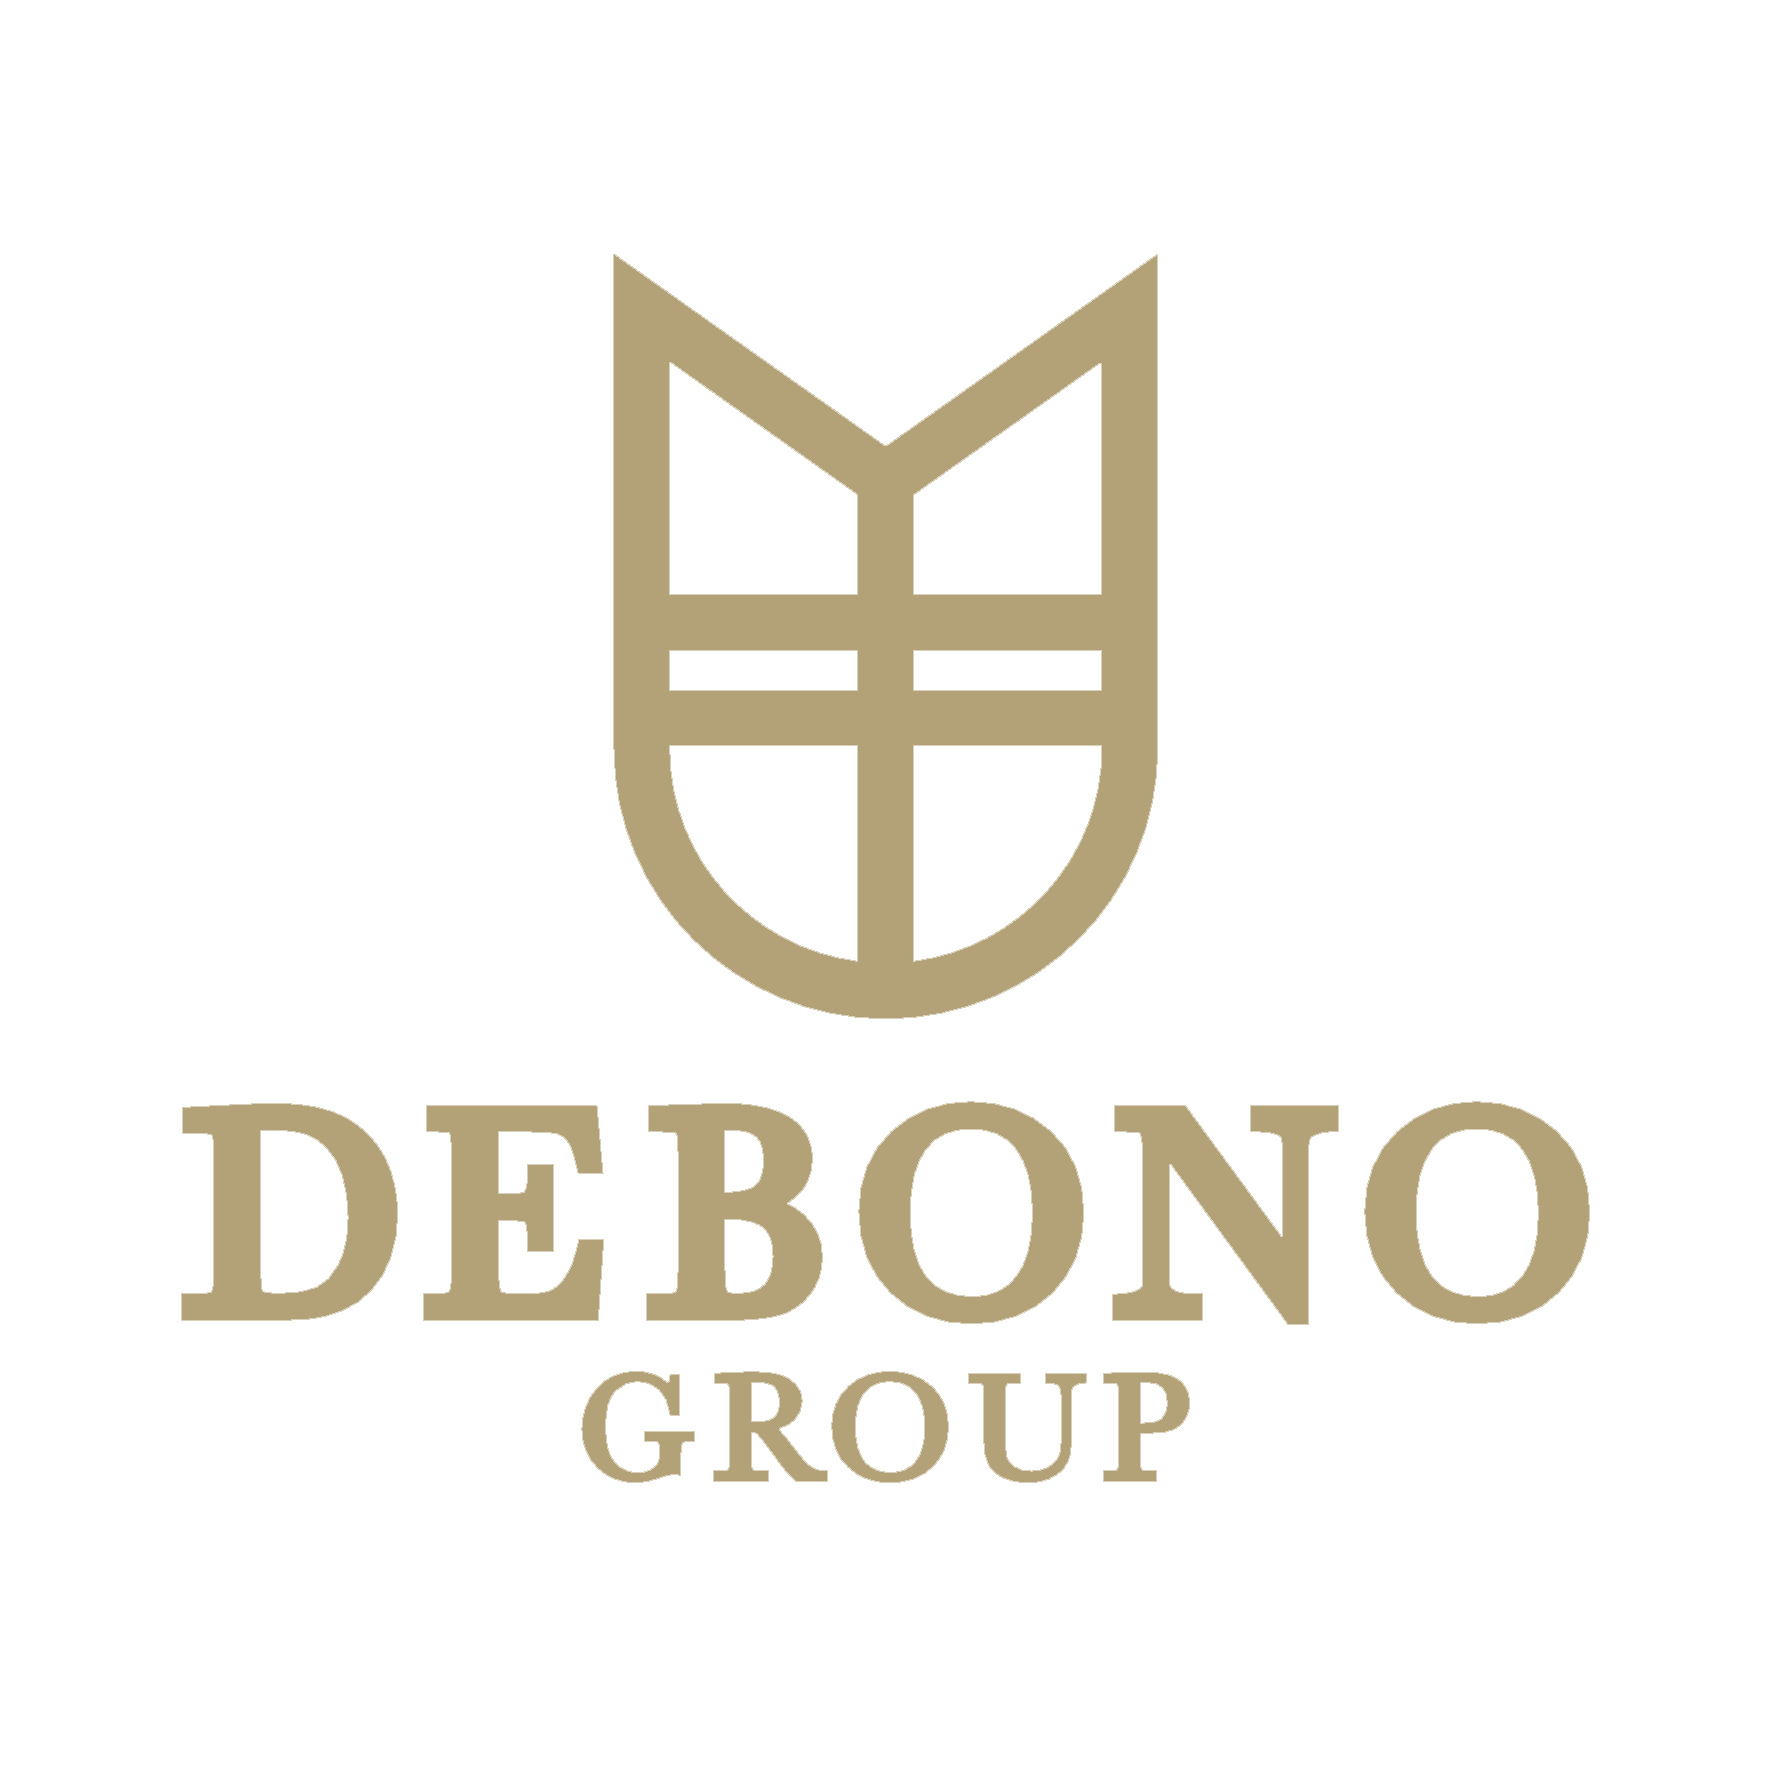 Debono Group logo